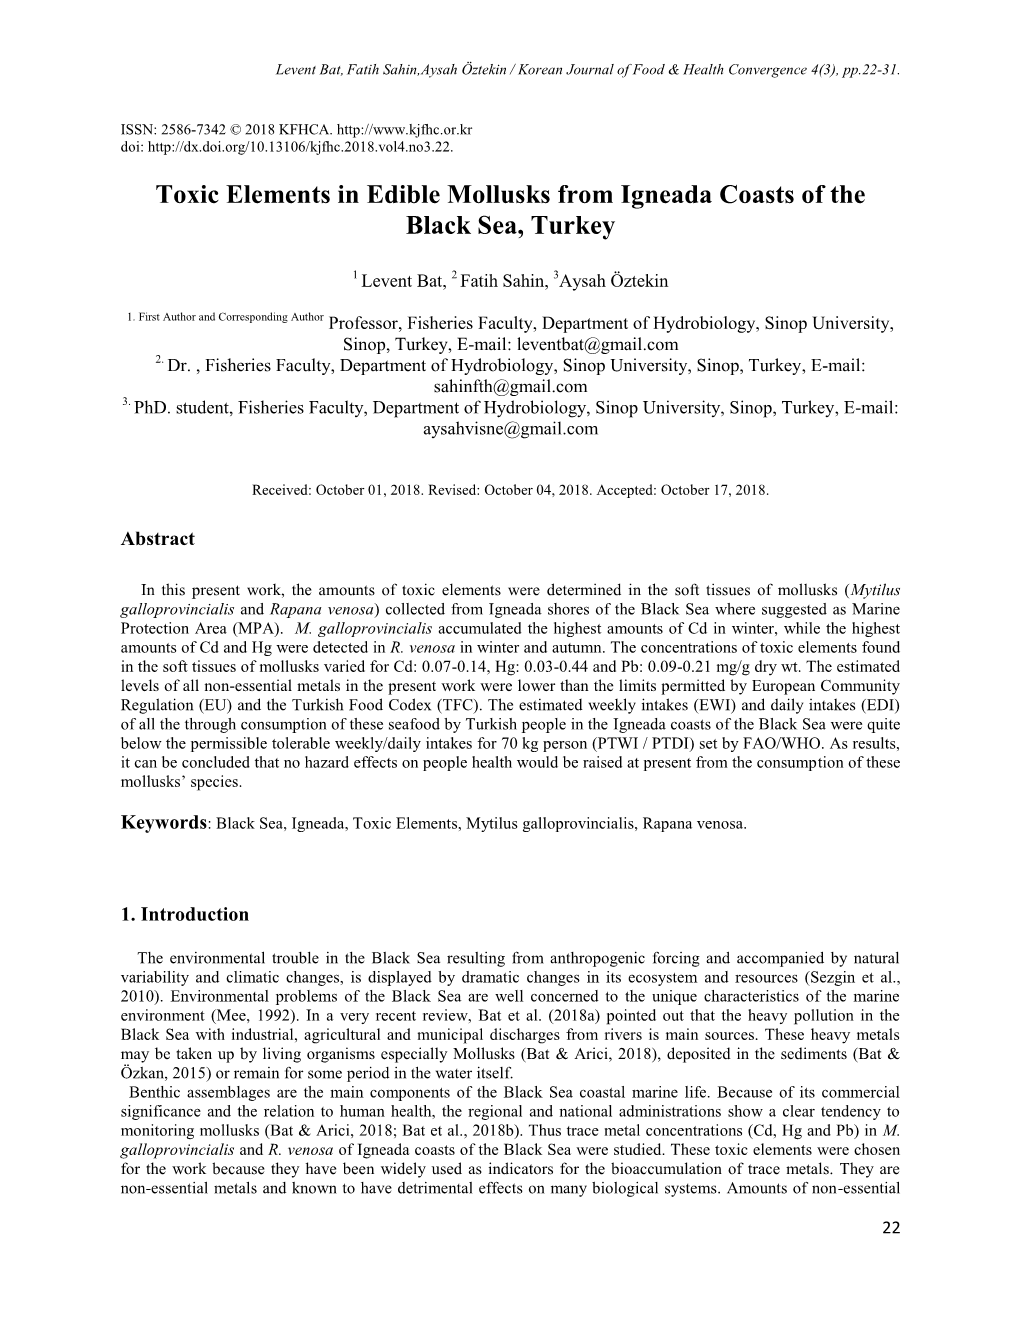 Toxic Elements in Edible Mollusks from Igneada Coasts of the Black Sea, Turkey